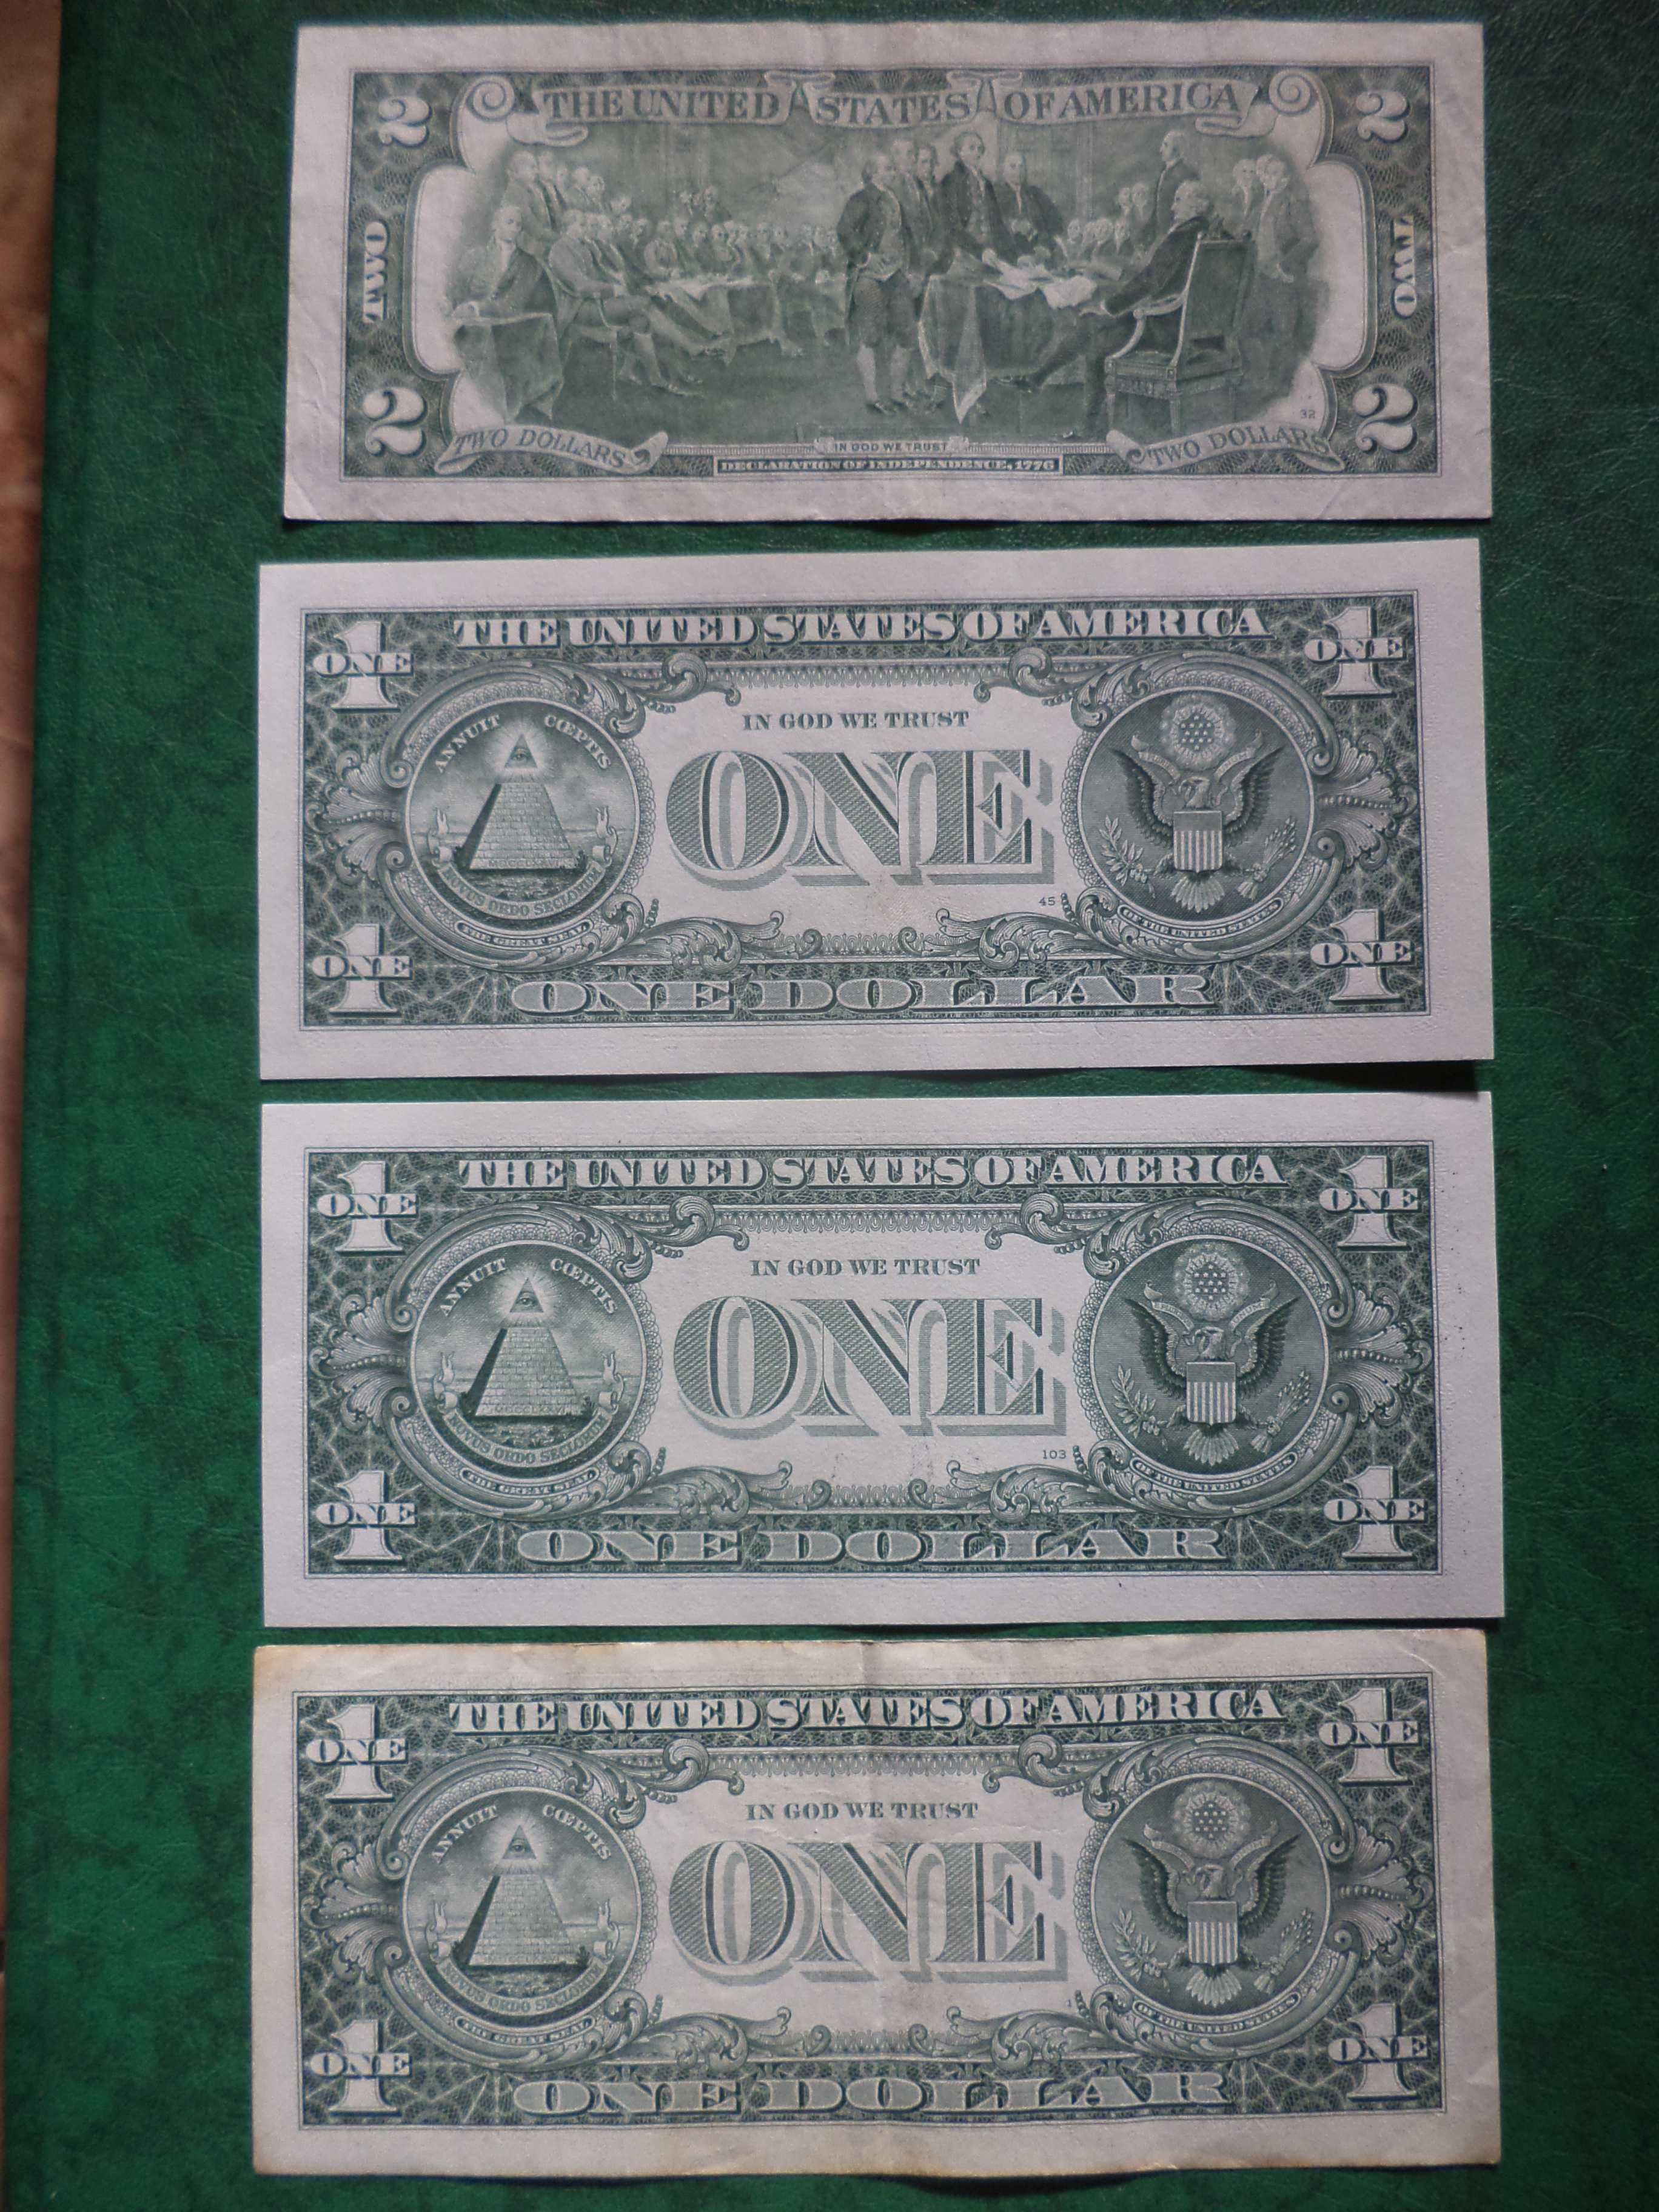 Bancnote vechi colectie 1 si 2 Dolari preț pt toate